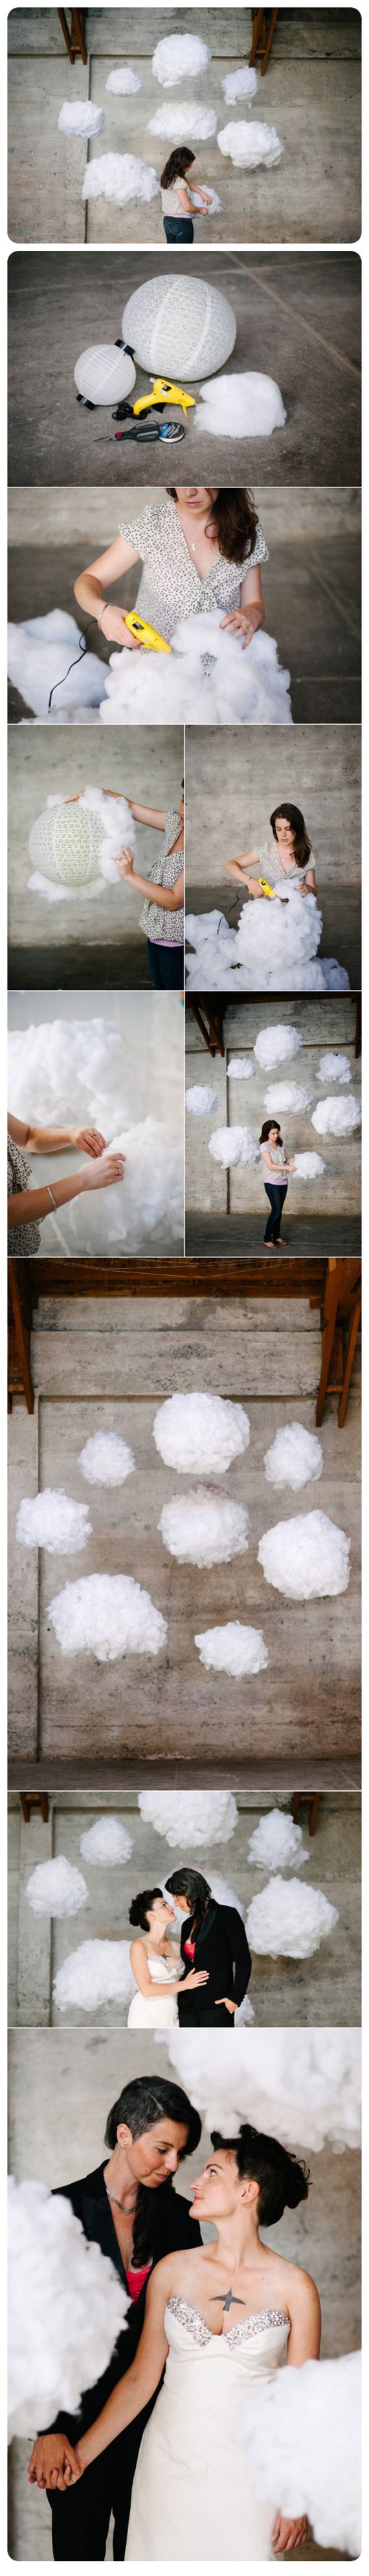 02-diy-balloon-cloud-decoration